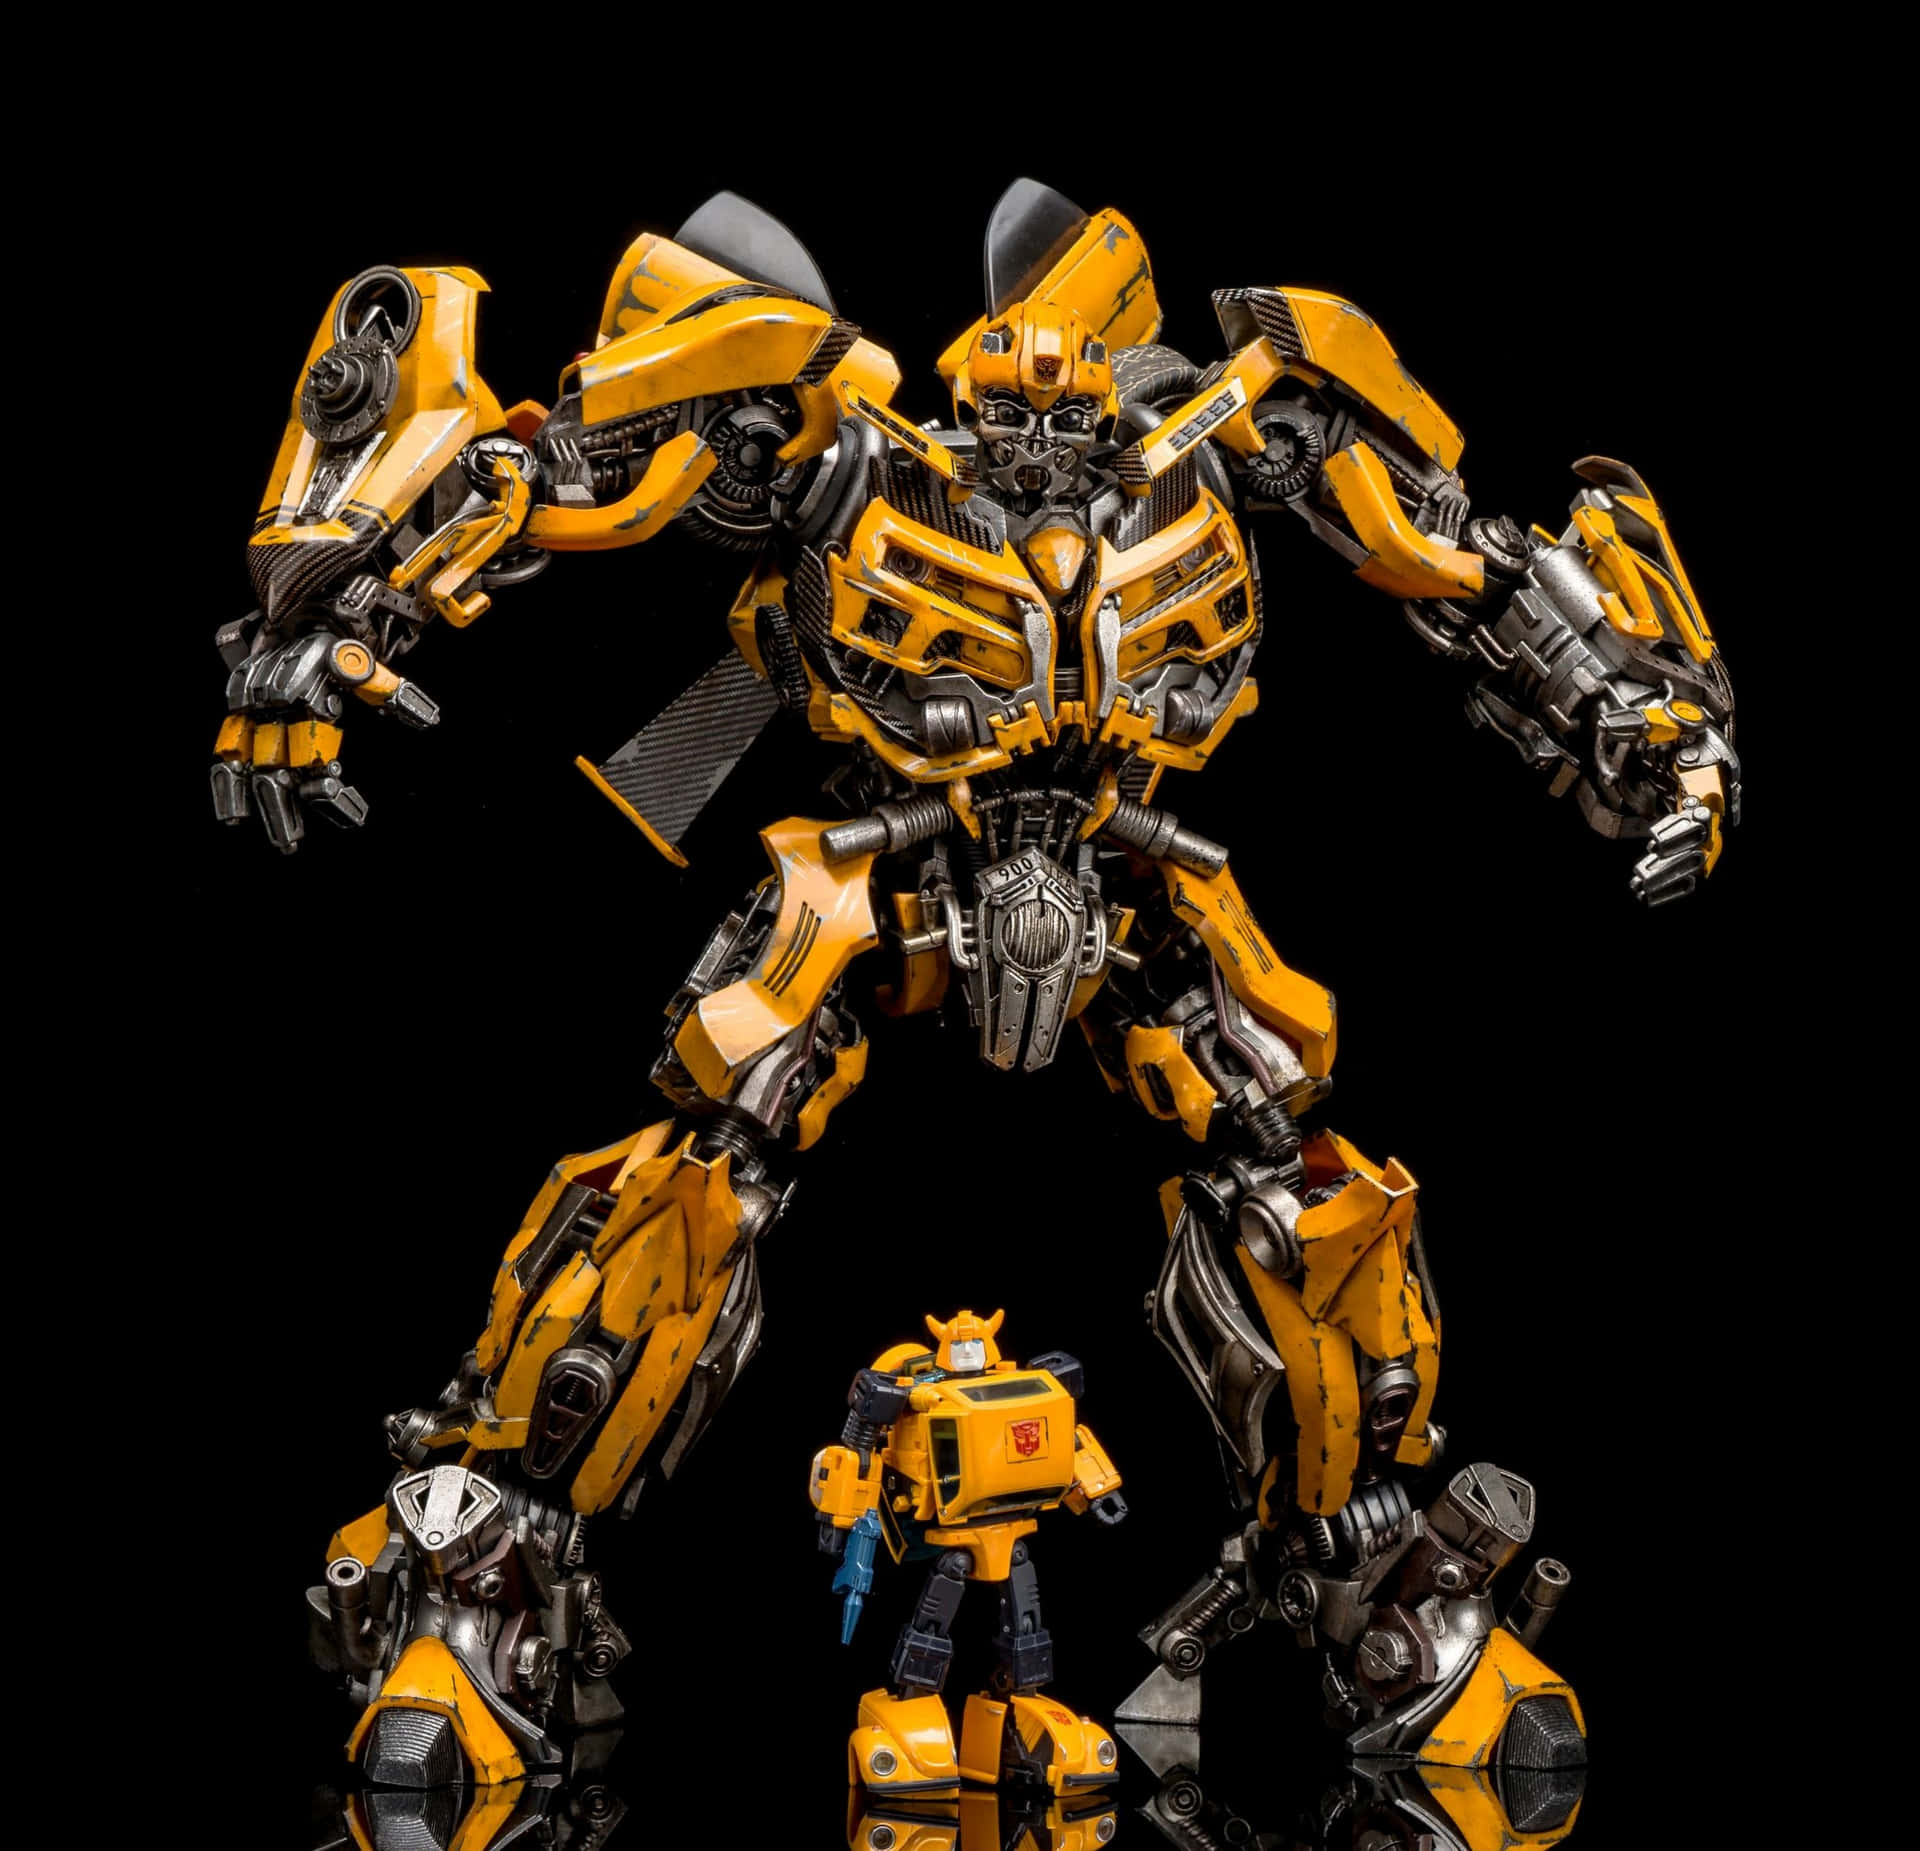 Radical transformation of an Autobot